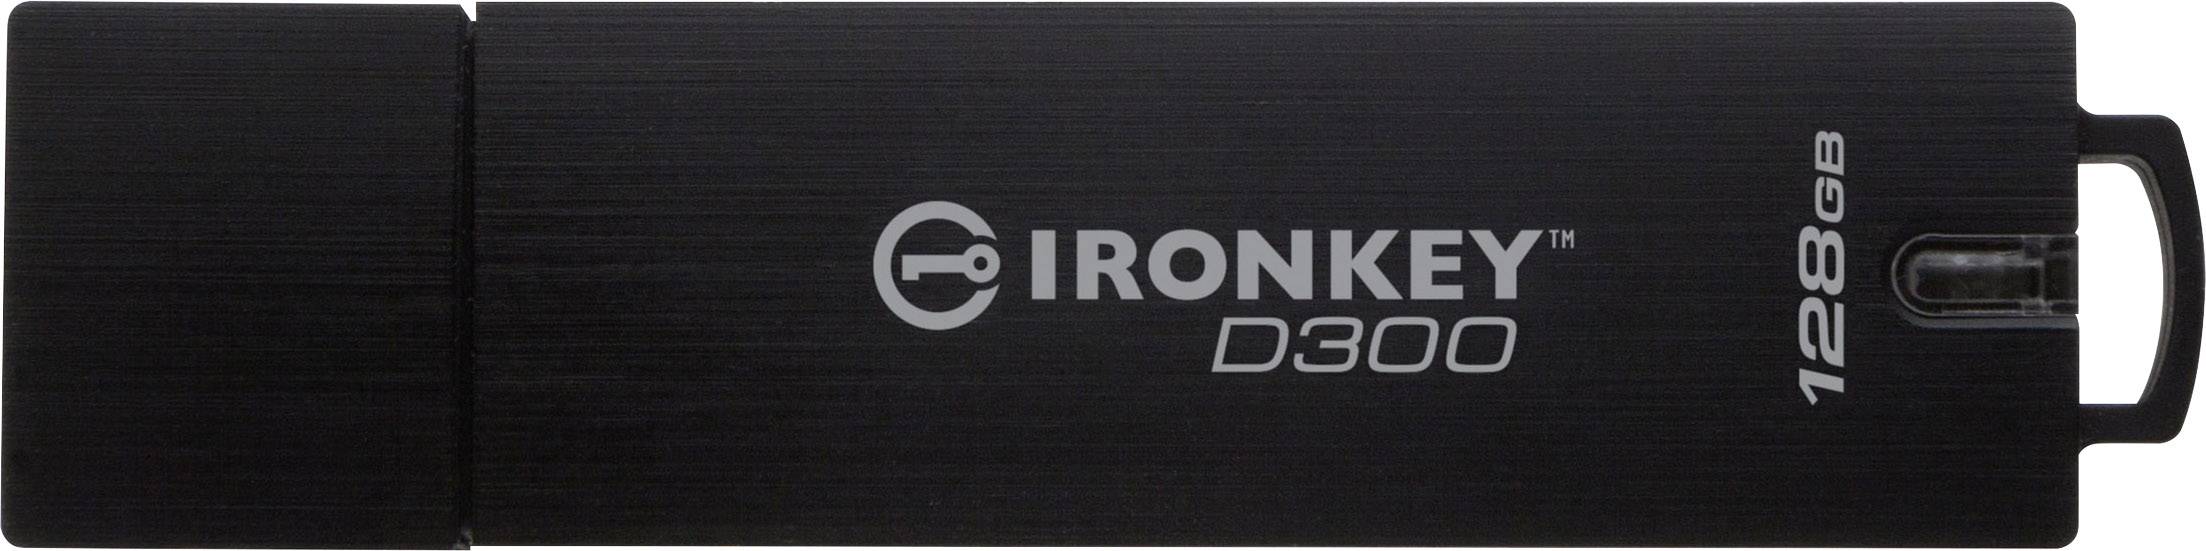 ironkey usb flash drive